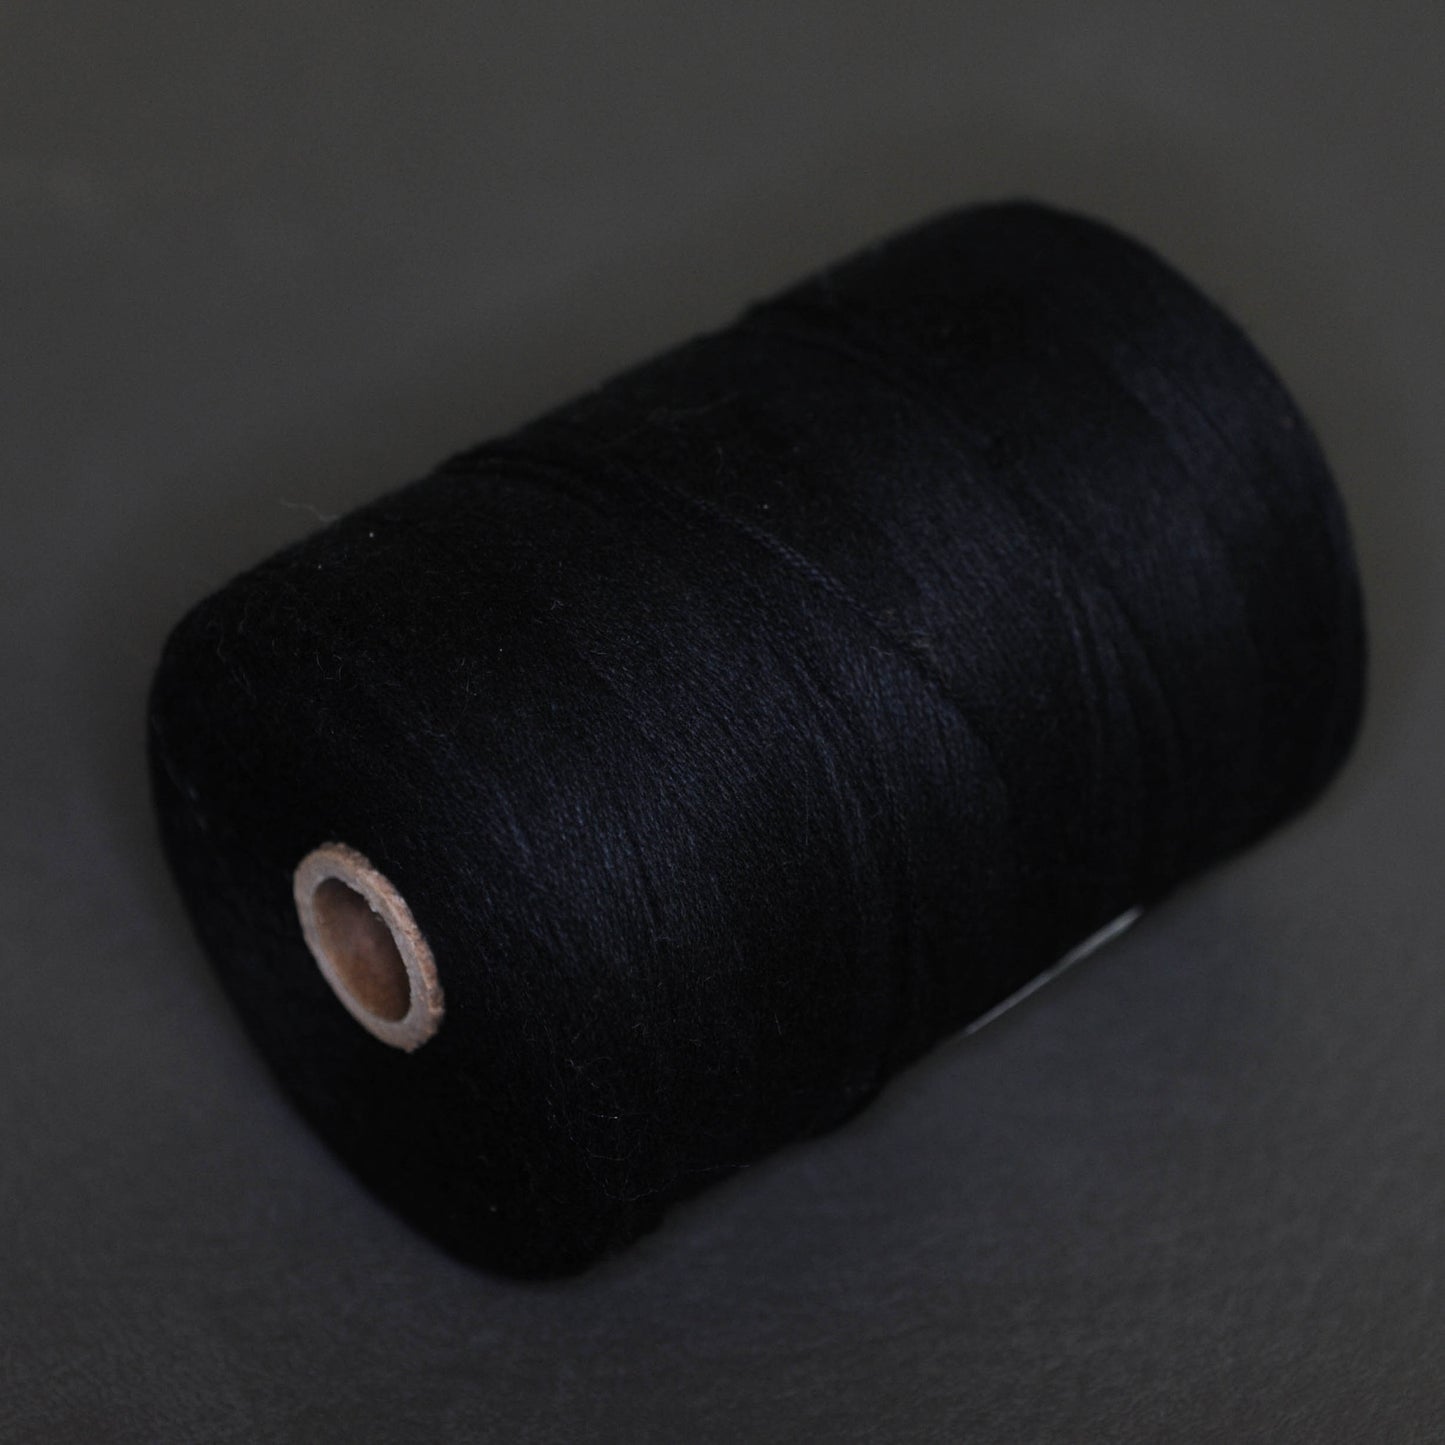 8/4 Cotton Coned Yarn from Maurice Brassard - 8 oz